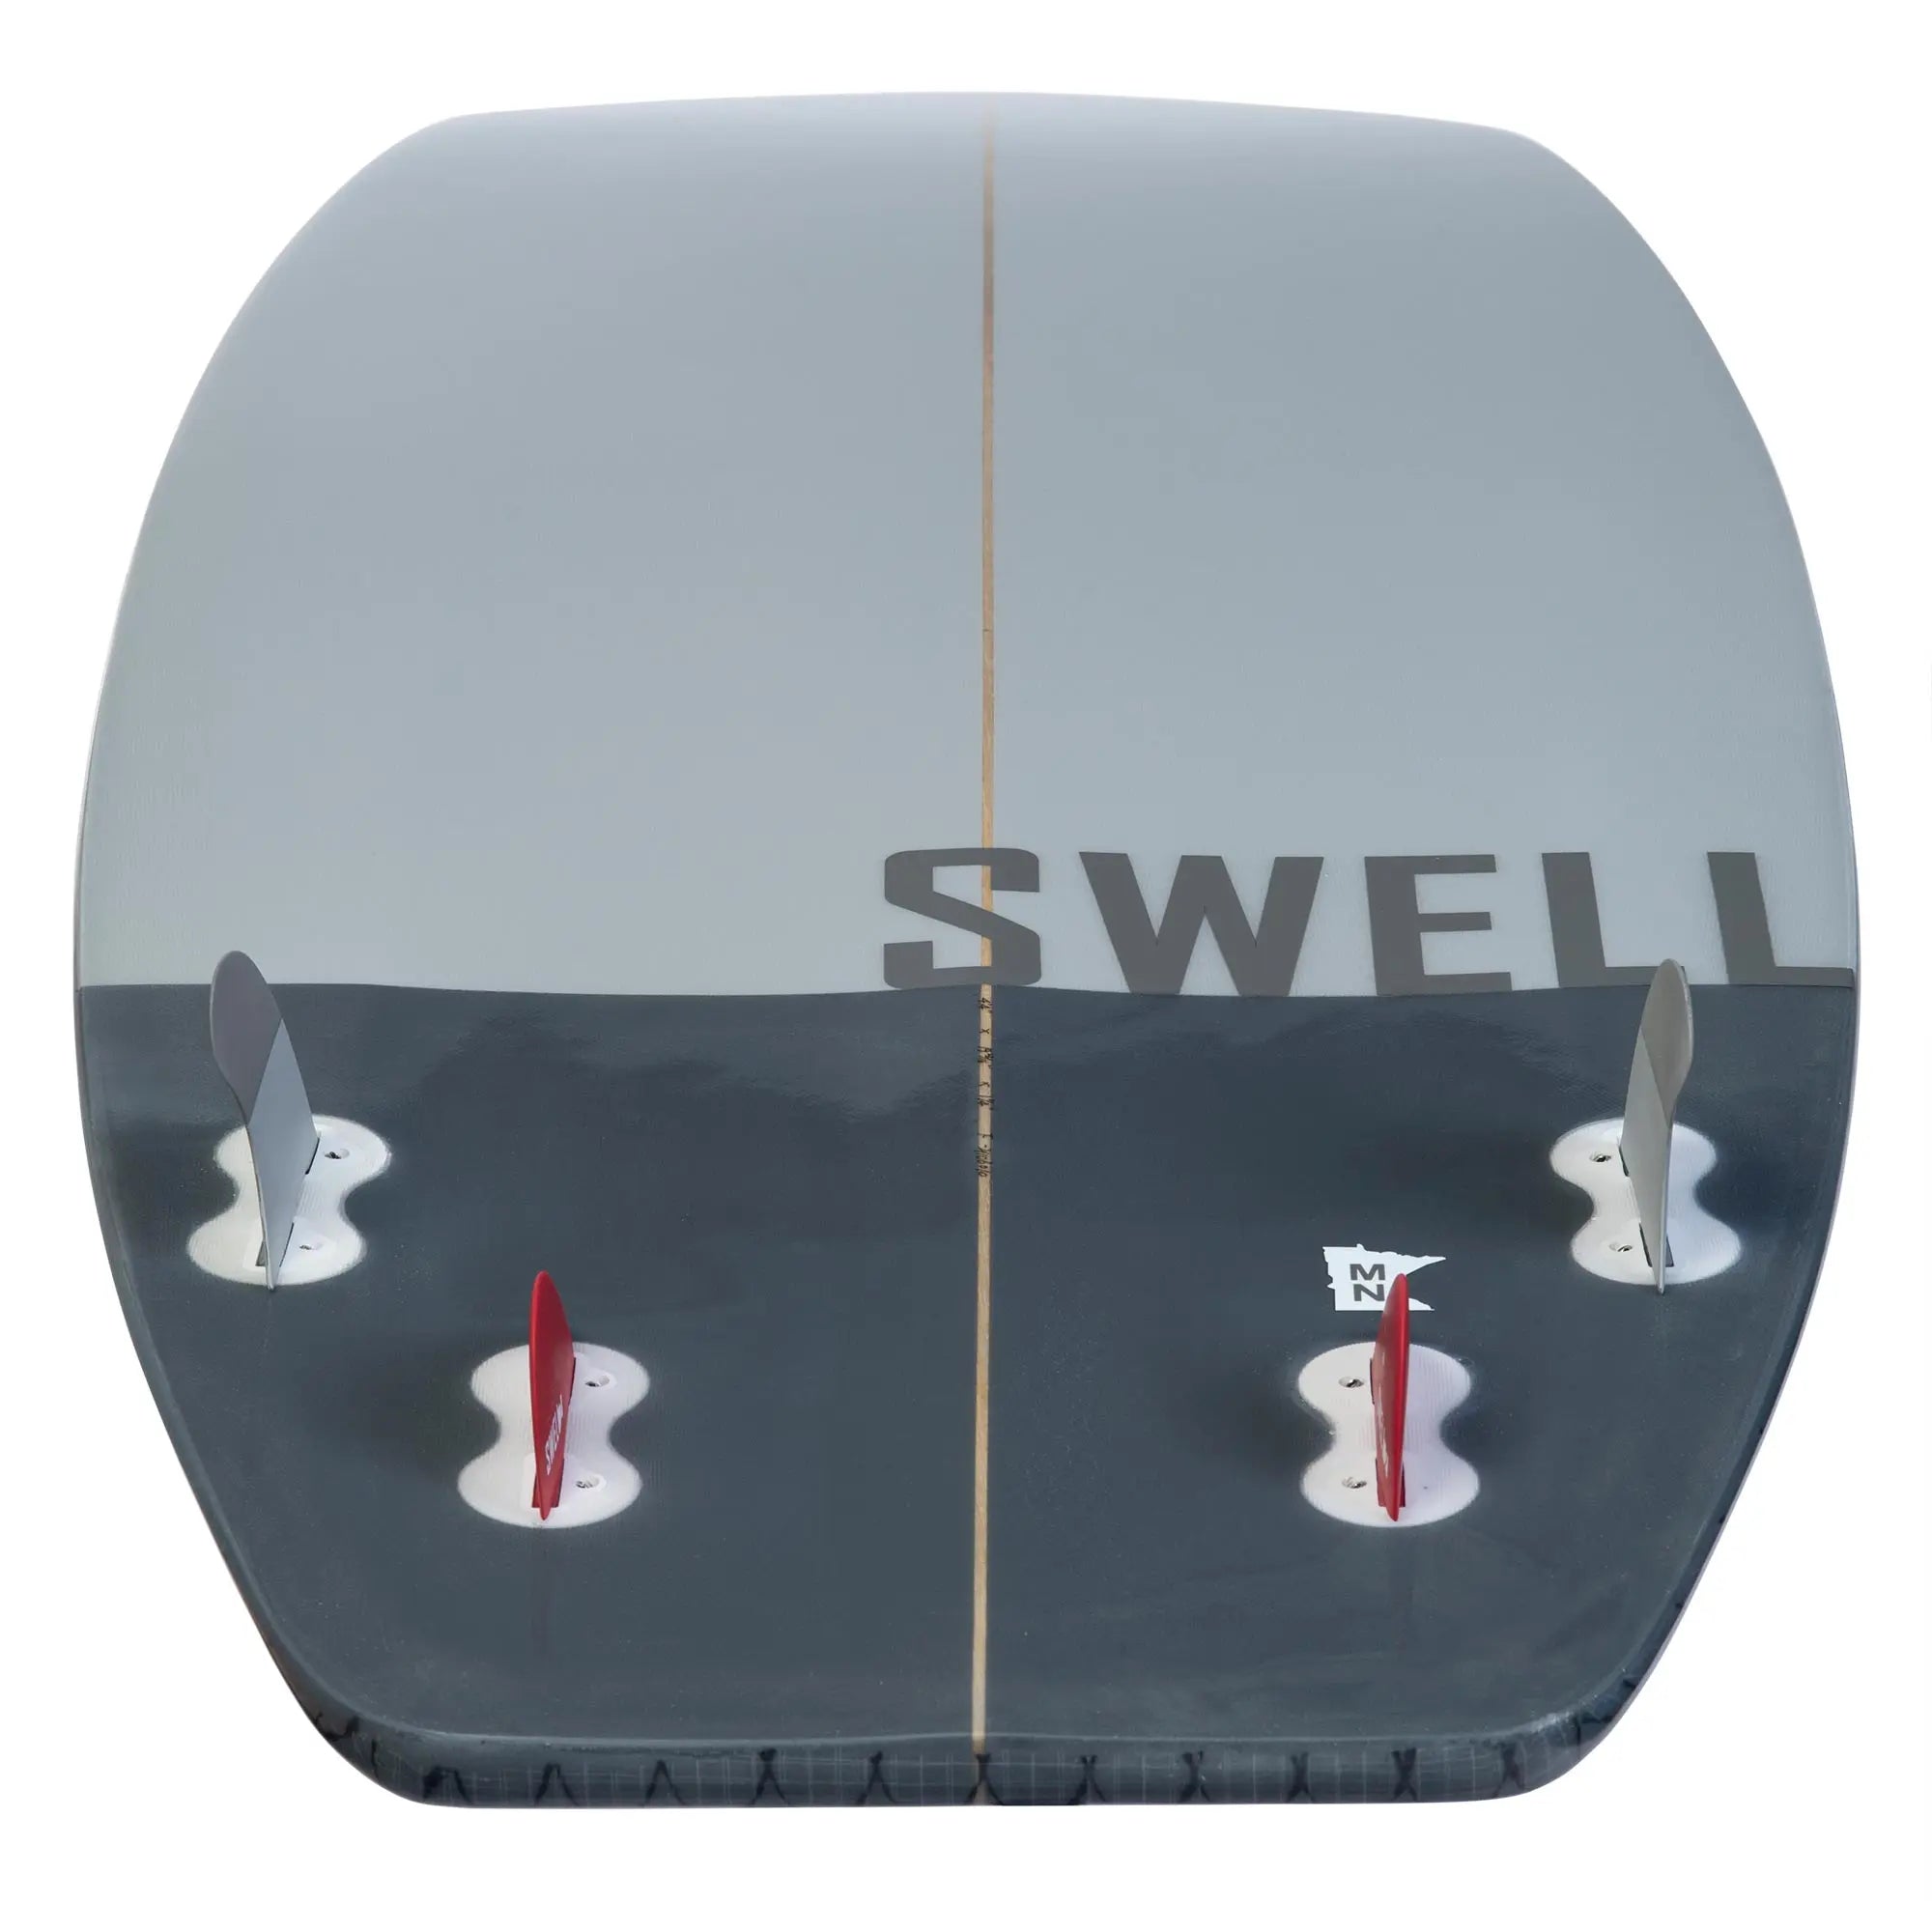 SWELL Wakesurf Itasca - Quad Surf Board SWELL Wakesurf